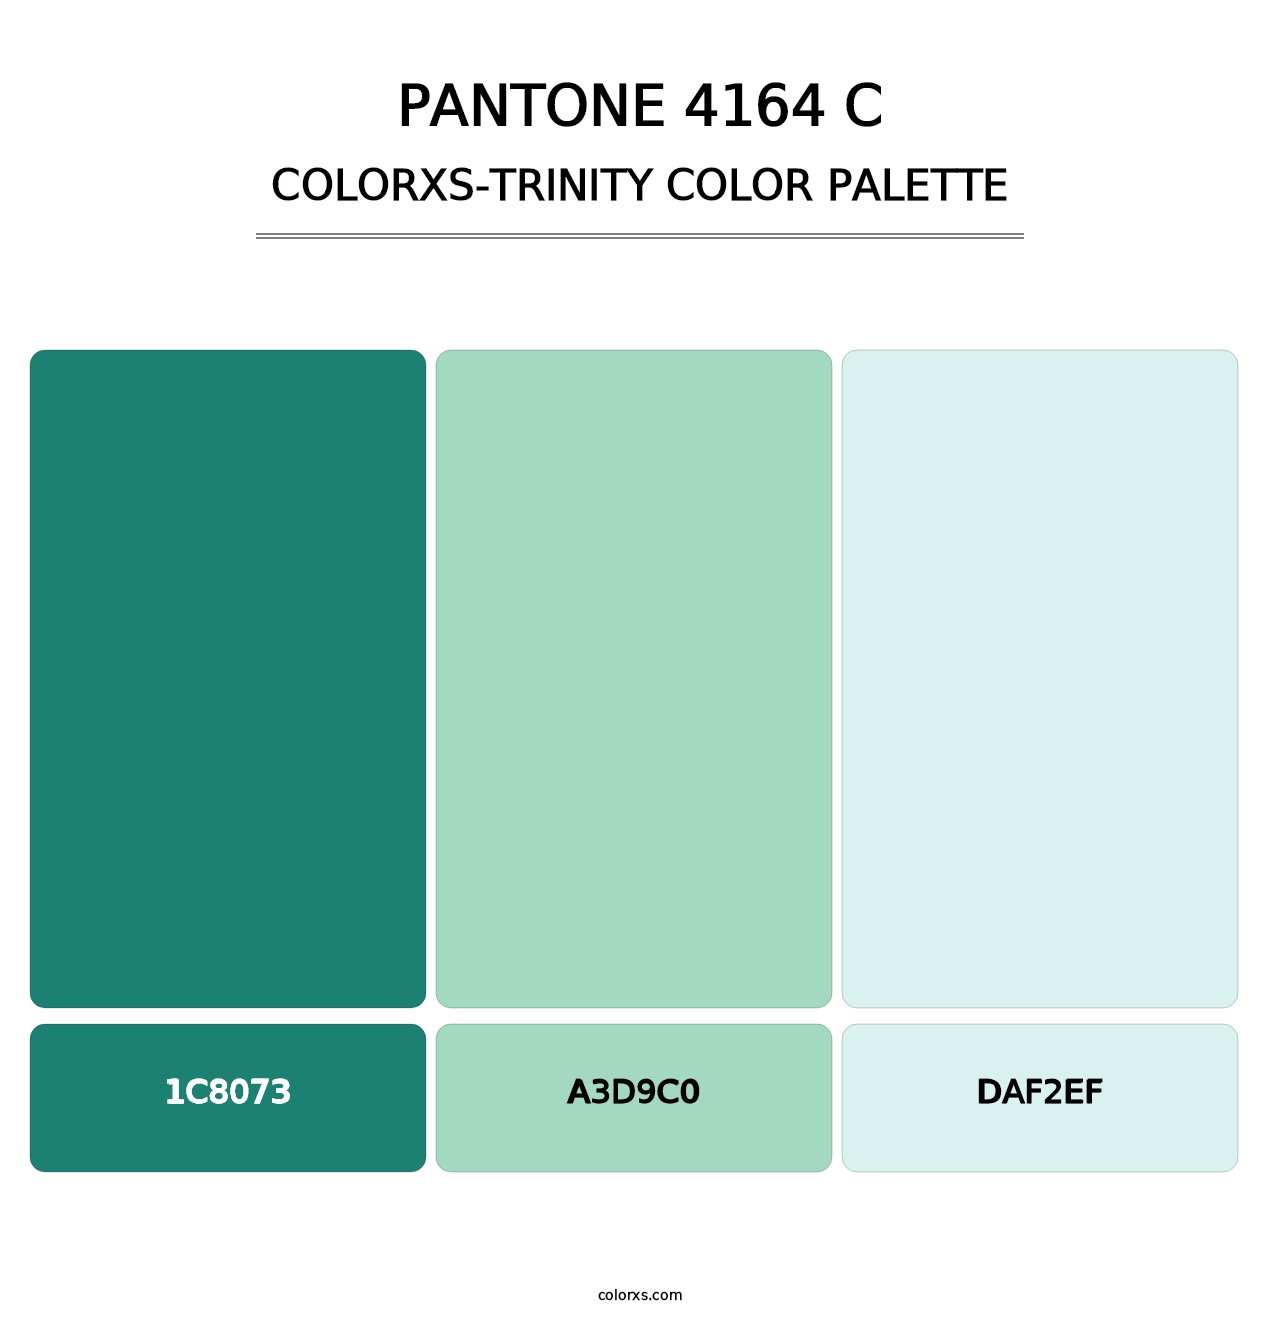 PANTONE 4164 C - Colorxs Trinity Palette